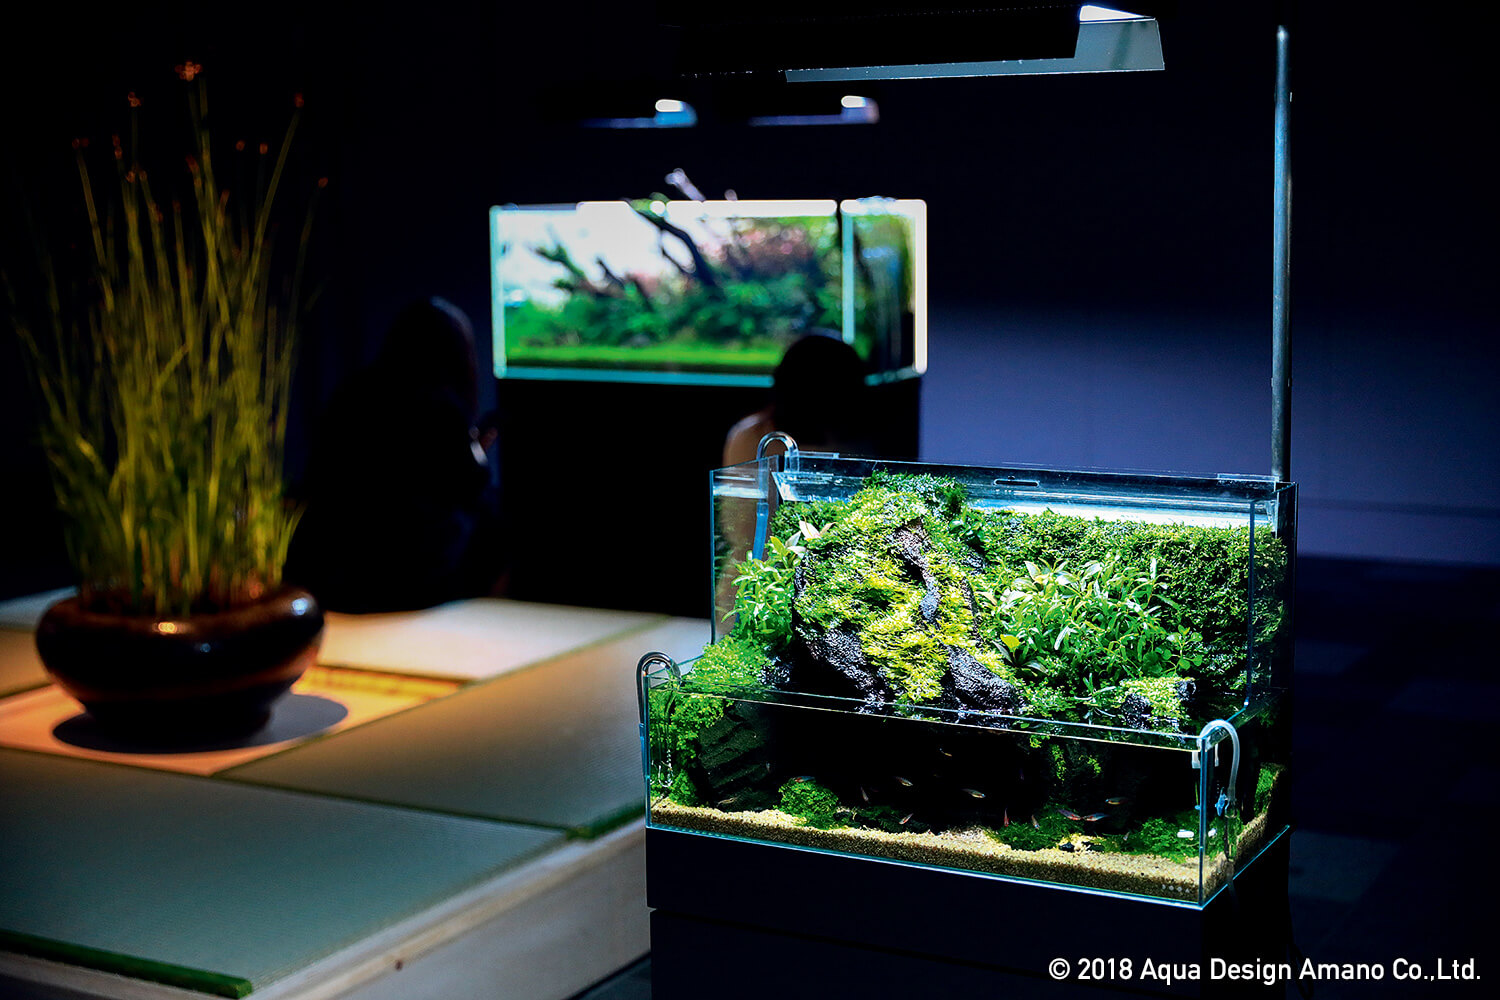 Aquariums in Japan